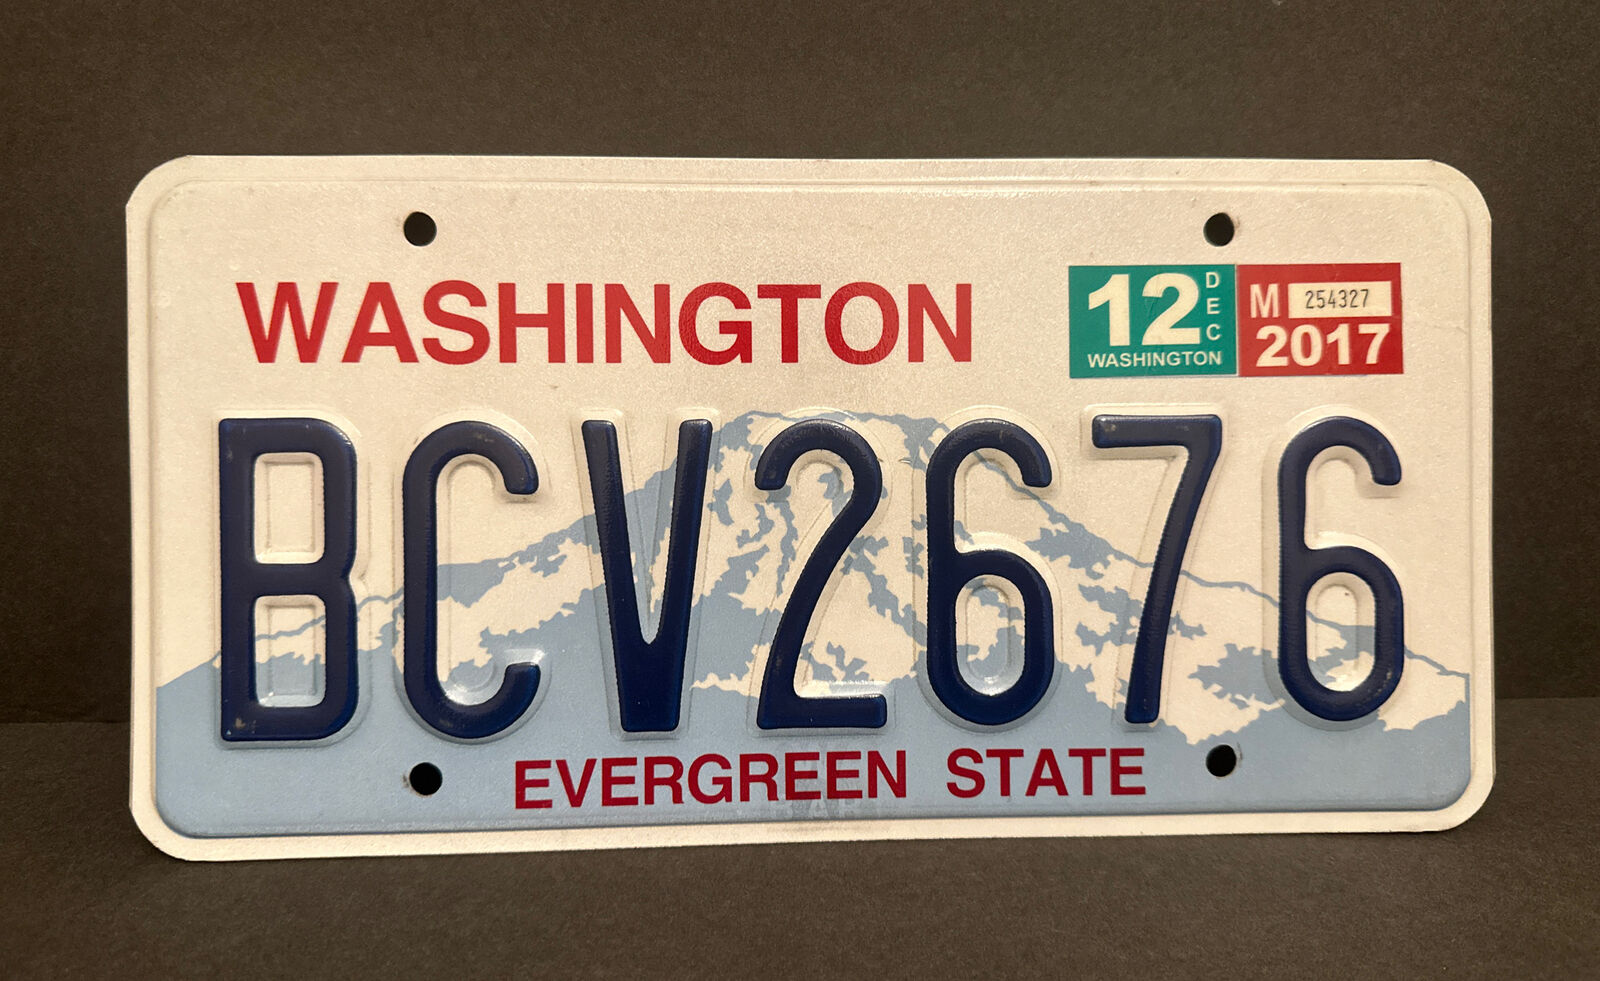 United States Washington Evergreen State License Plate BCV 2676 w/Stickers, MINT